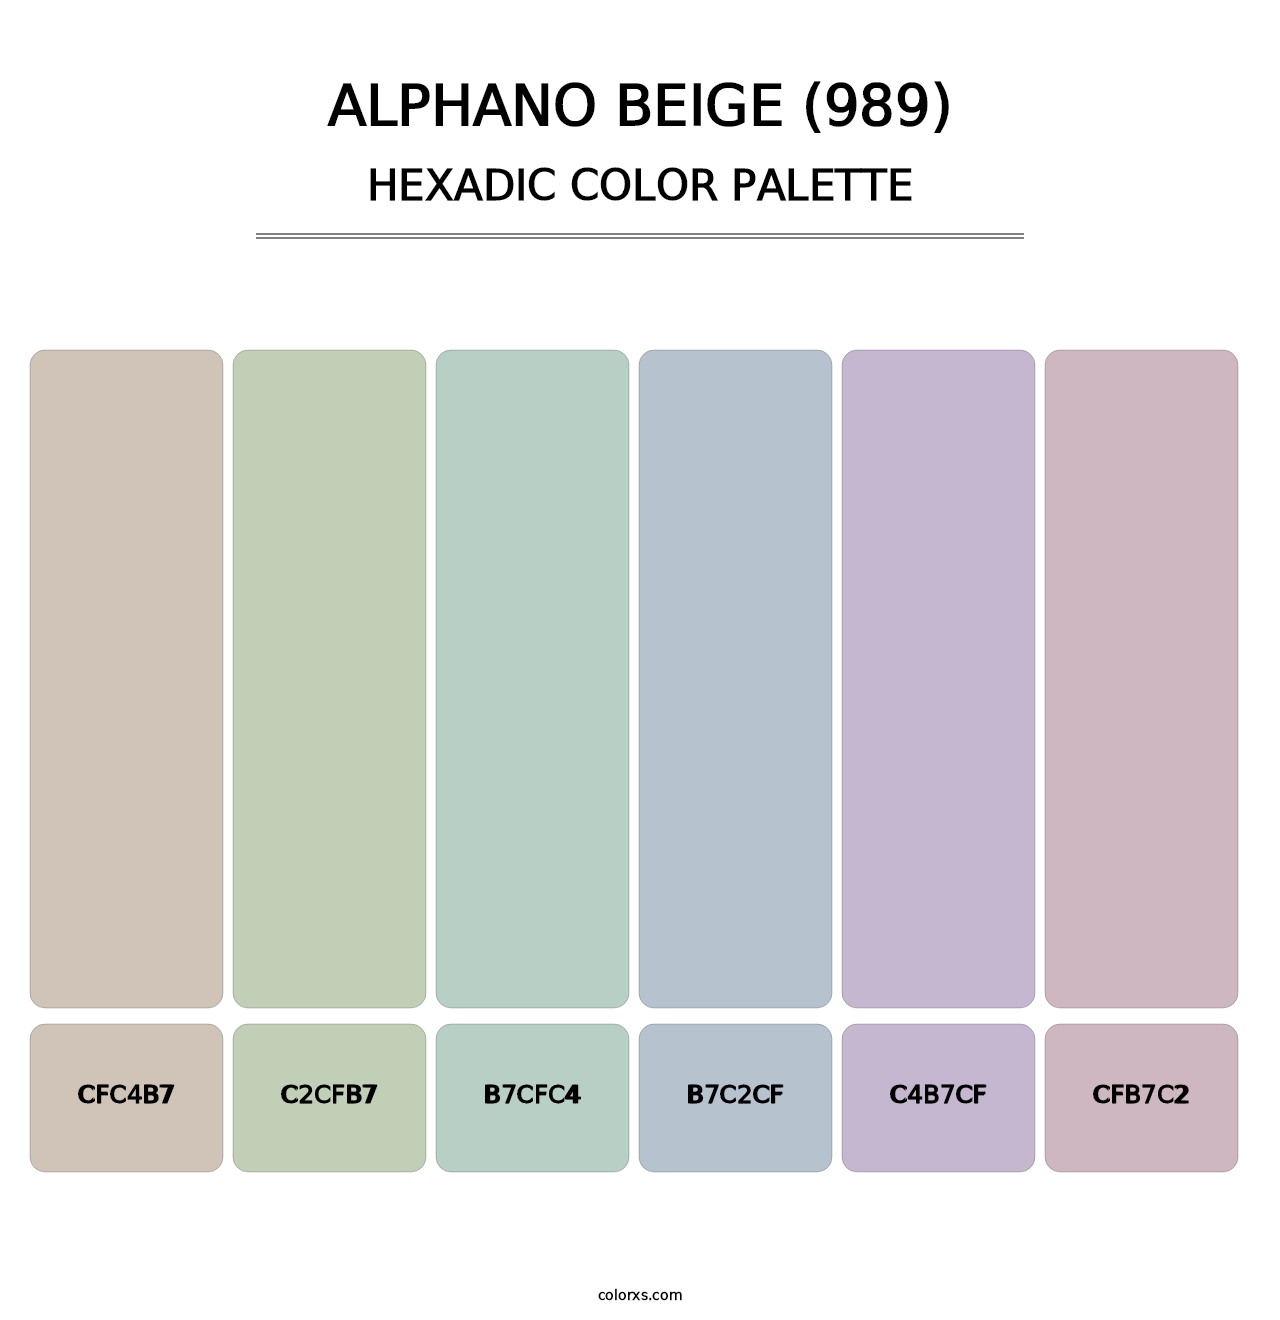 Alphano Beige (989) - Hexadic Color Palette